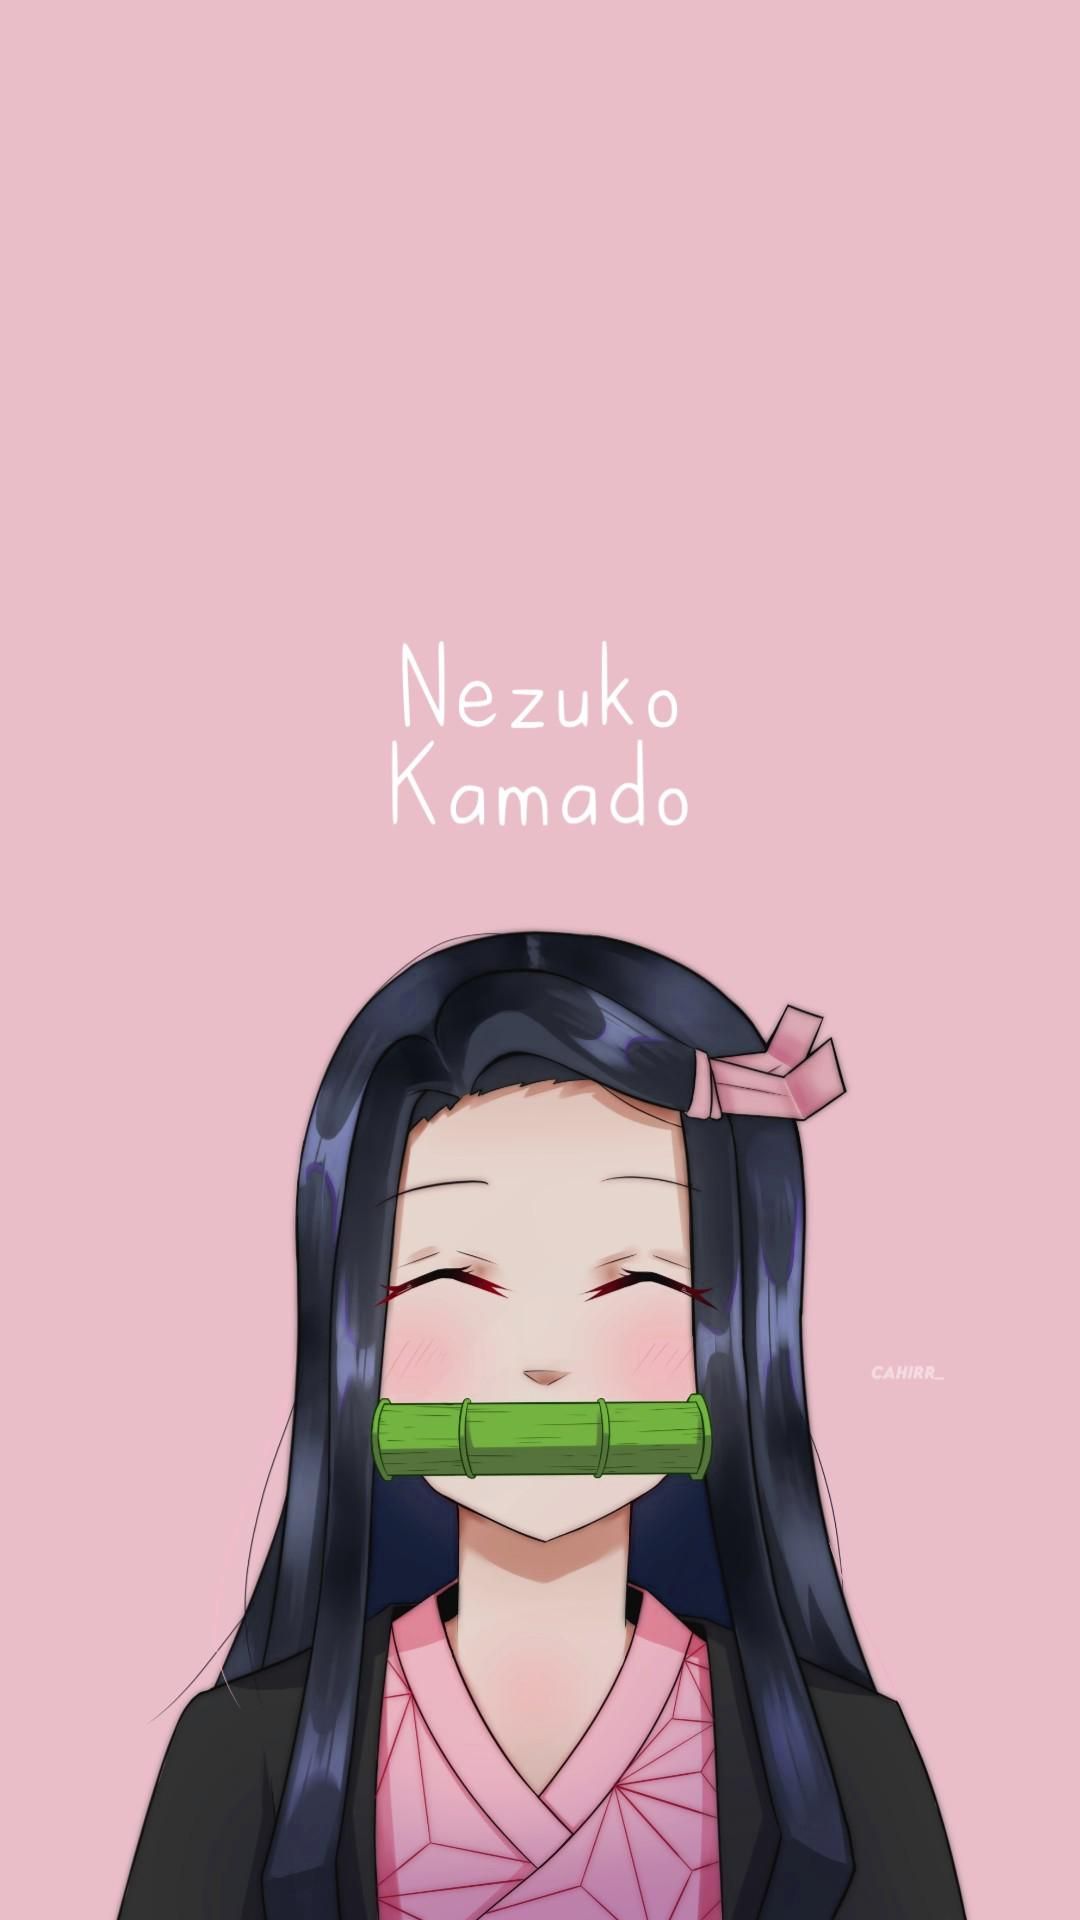 Nezuko Kamado from Demon Slayer anime wallpaper with pink background and text above - Nezuko